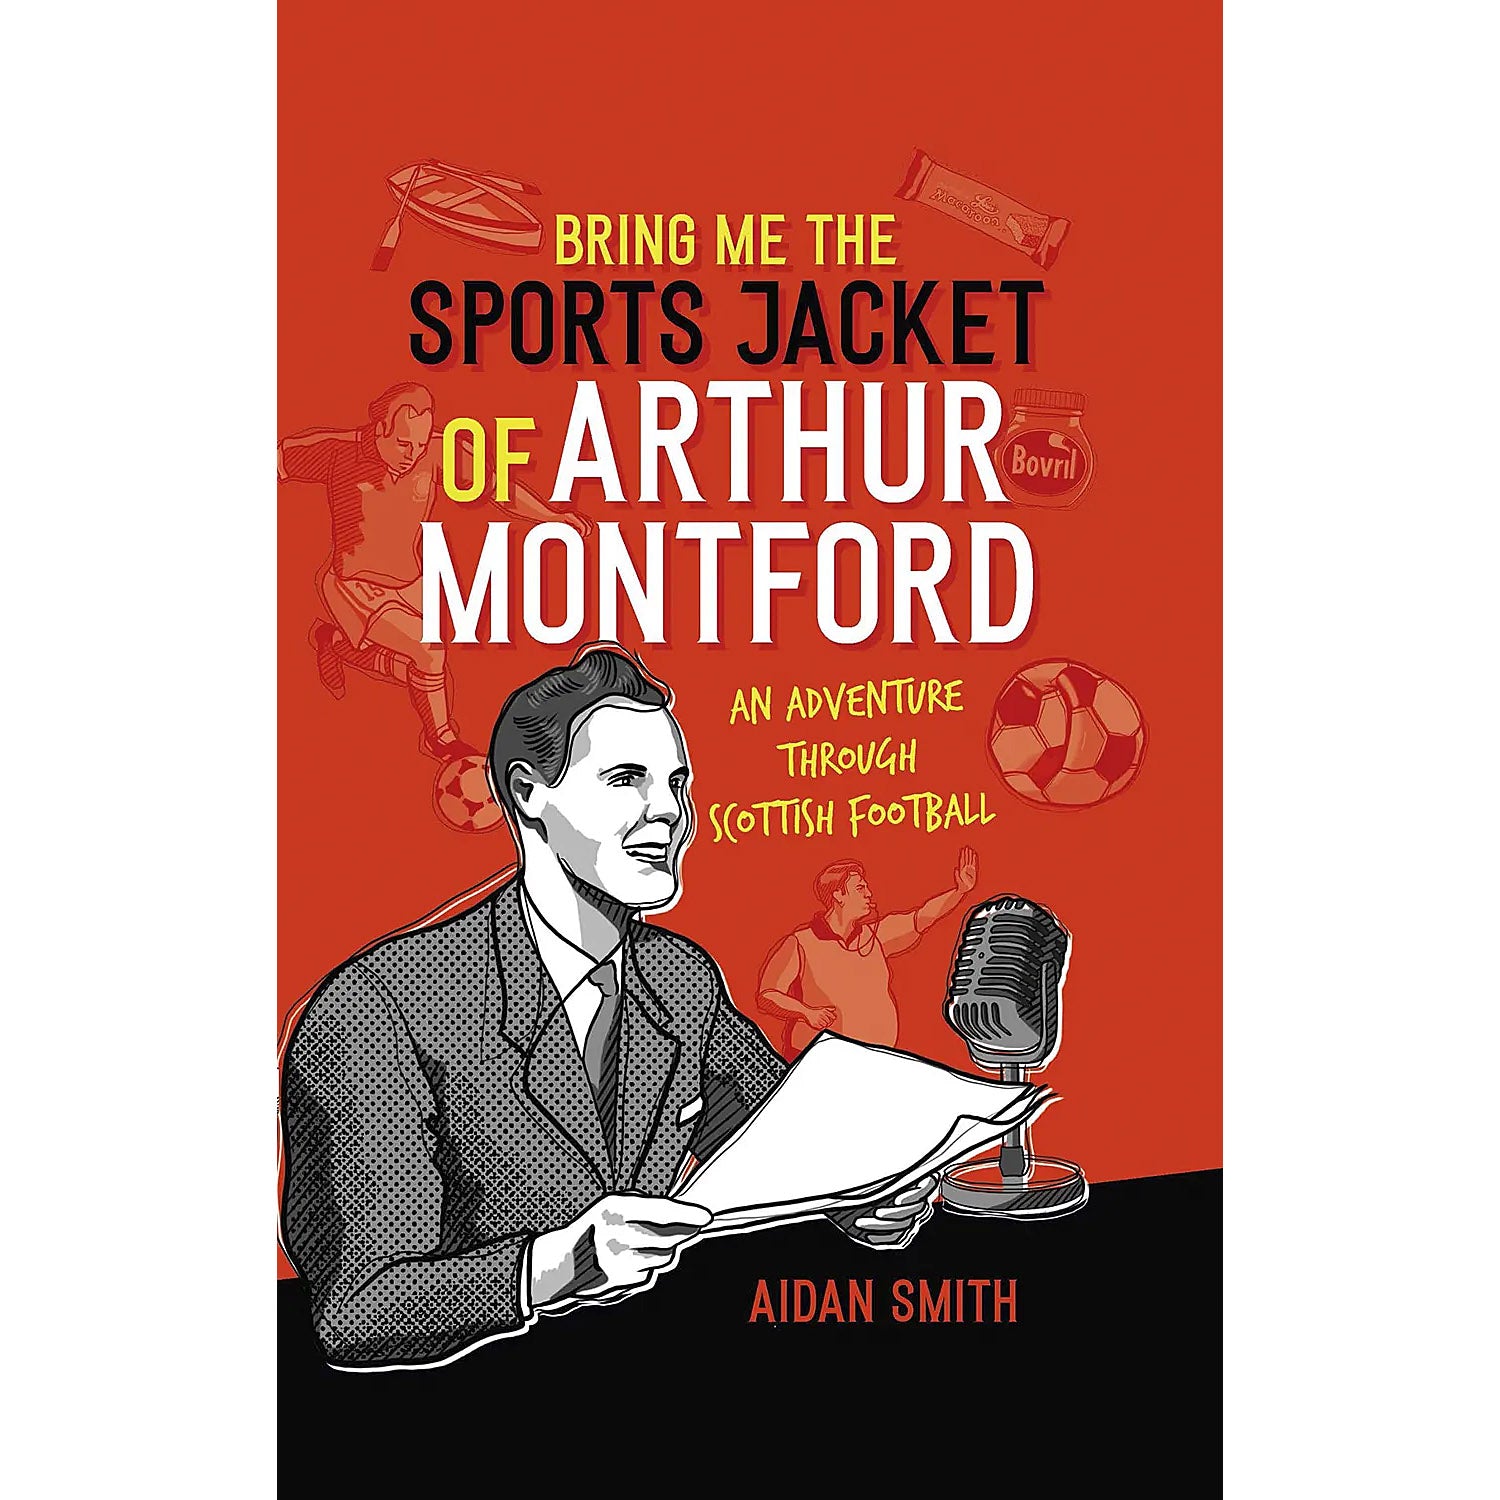 Bring Me the Sports Jacket of Arthur Montford – An Adventure Through Scottish Football